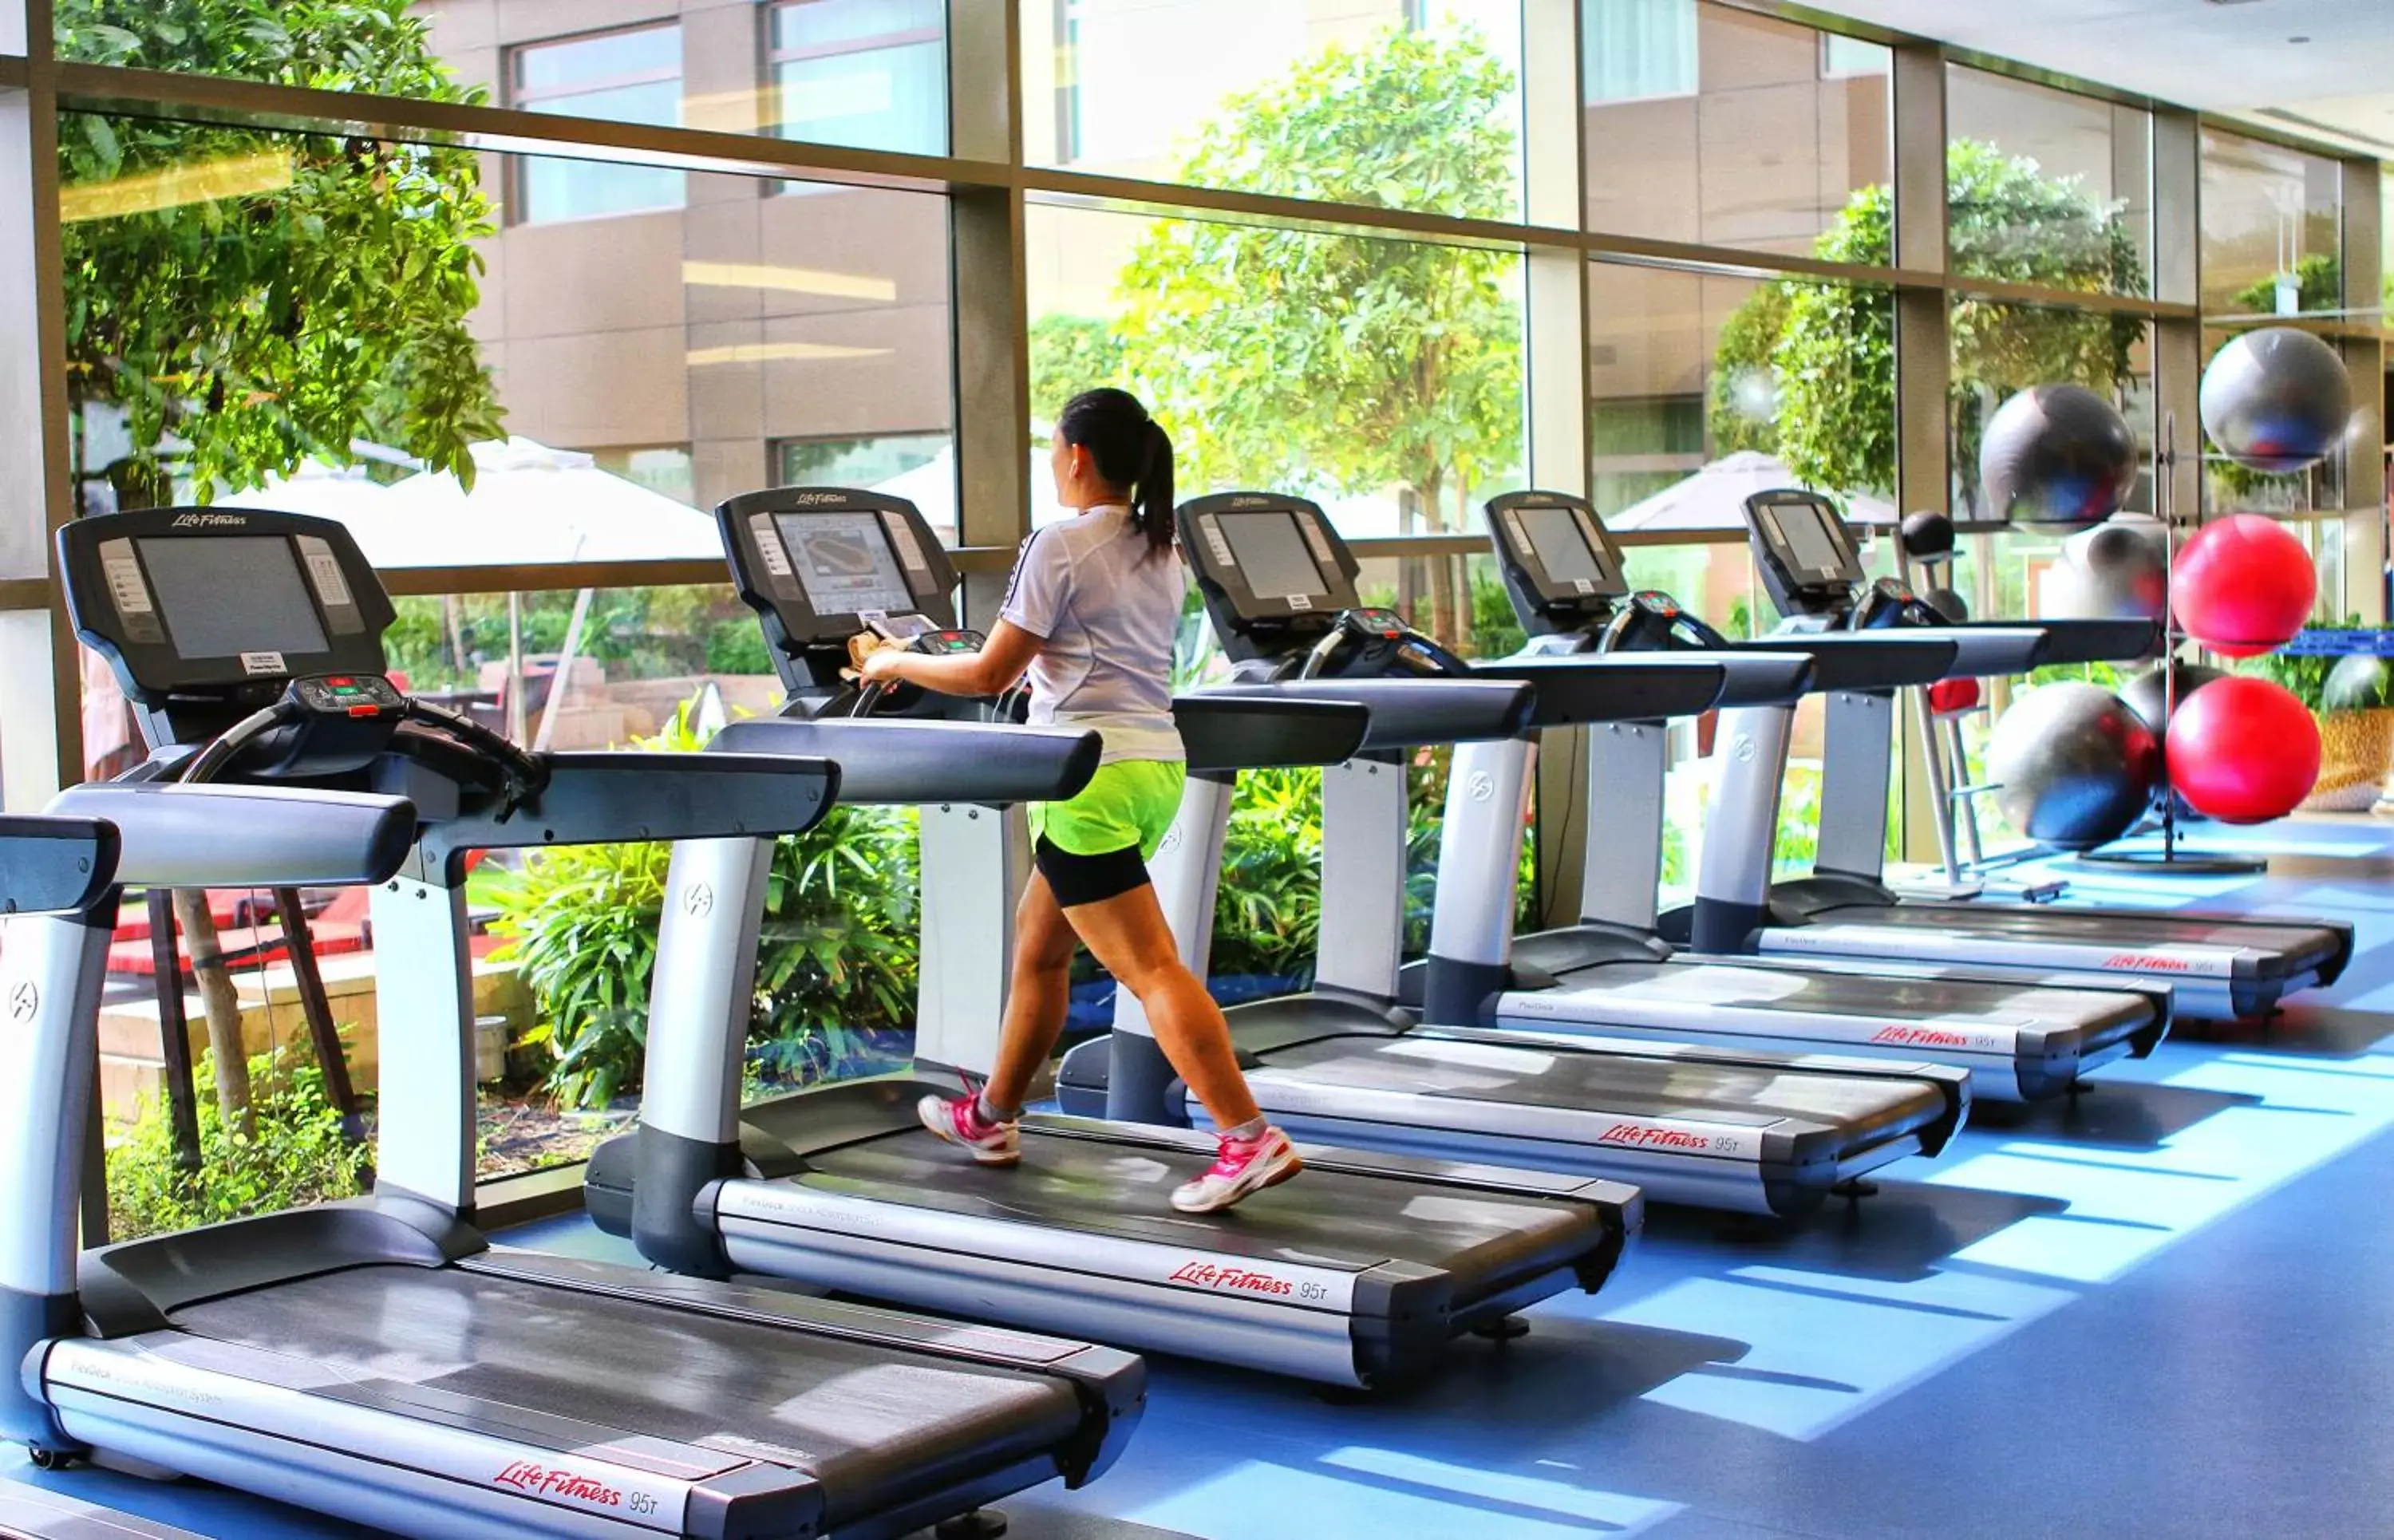 Fitness centre/facilities, Fitness Center/Facilities in Swissôtel Living Al Ghurair